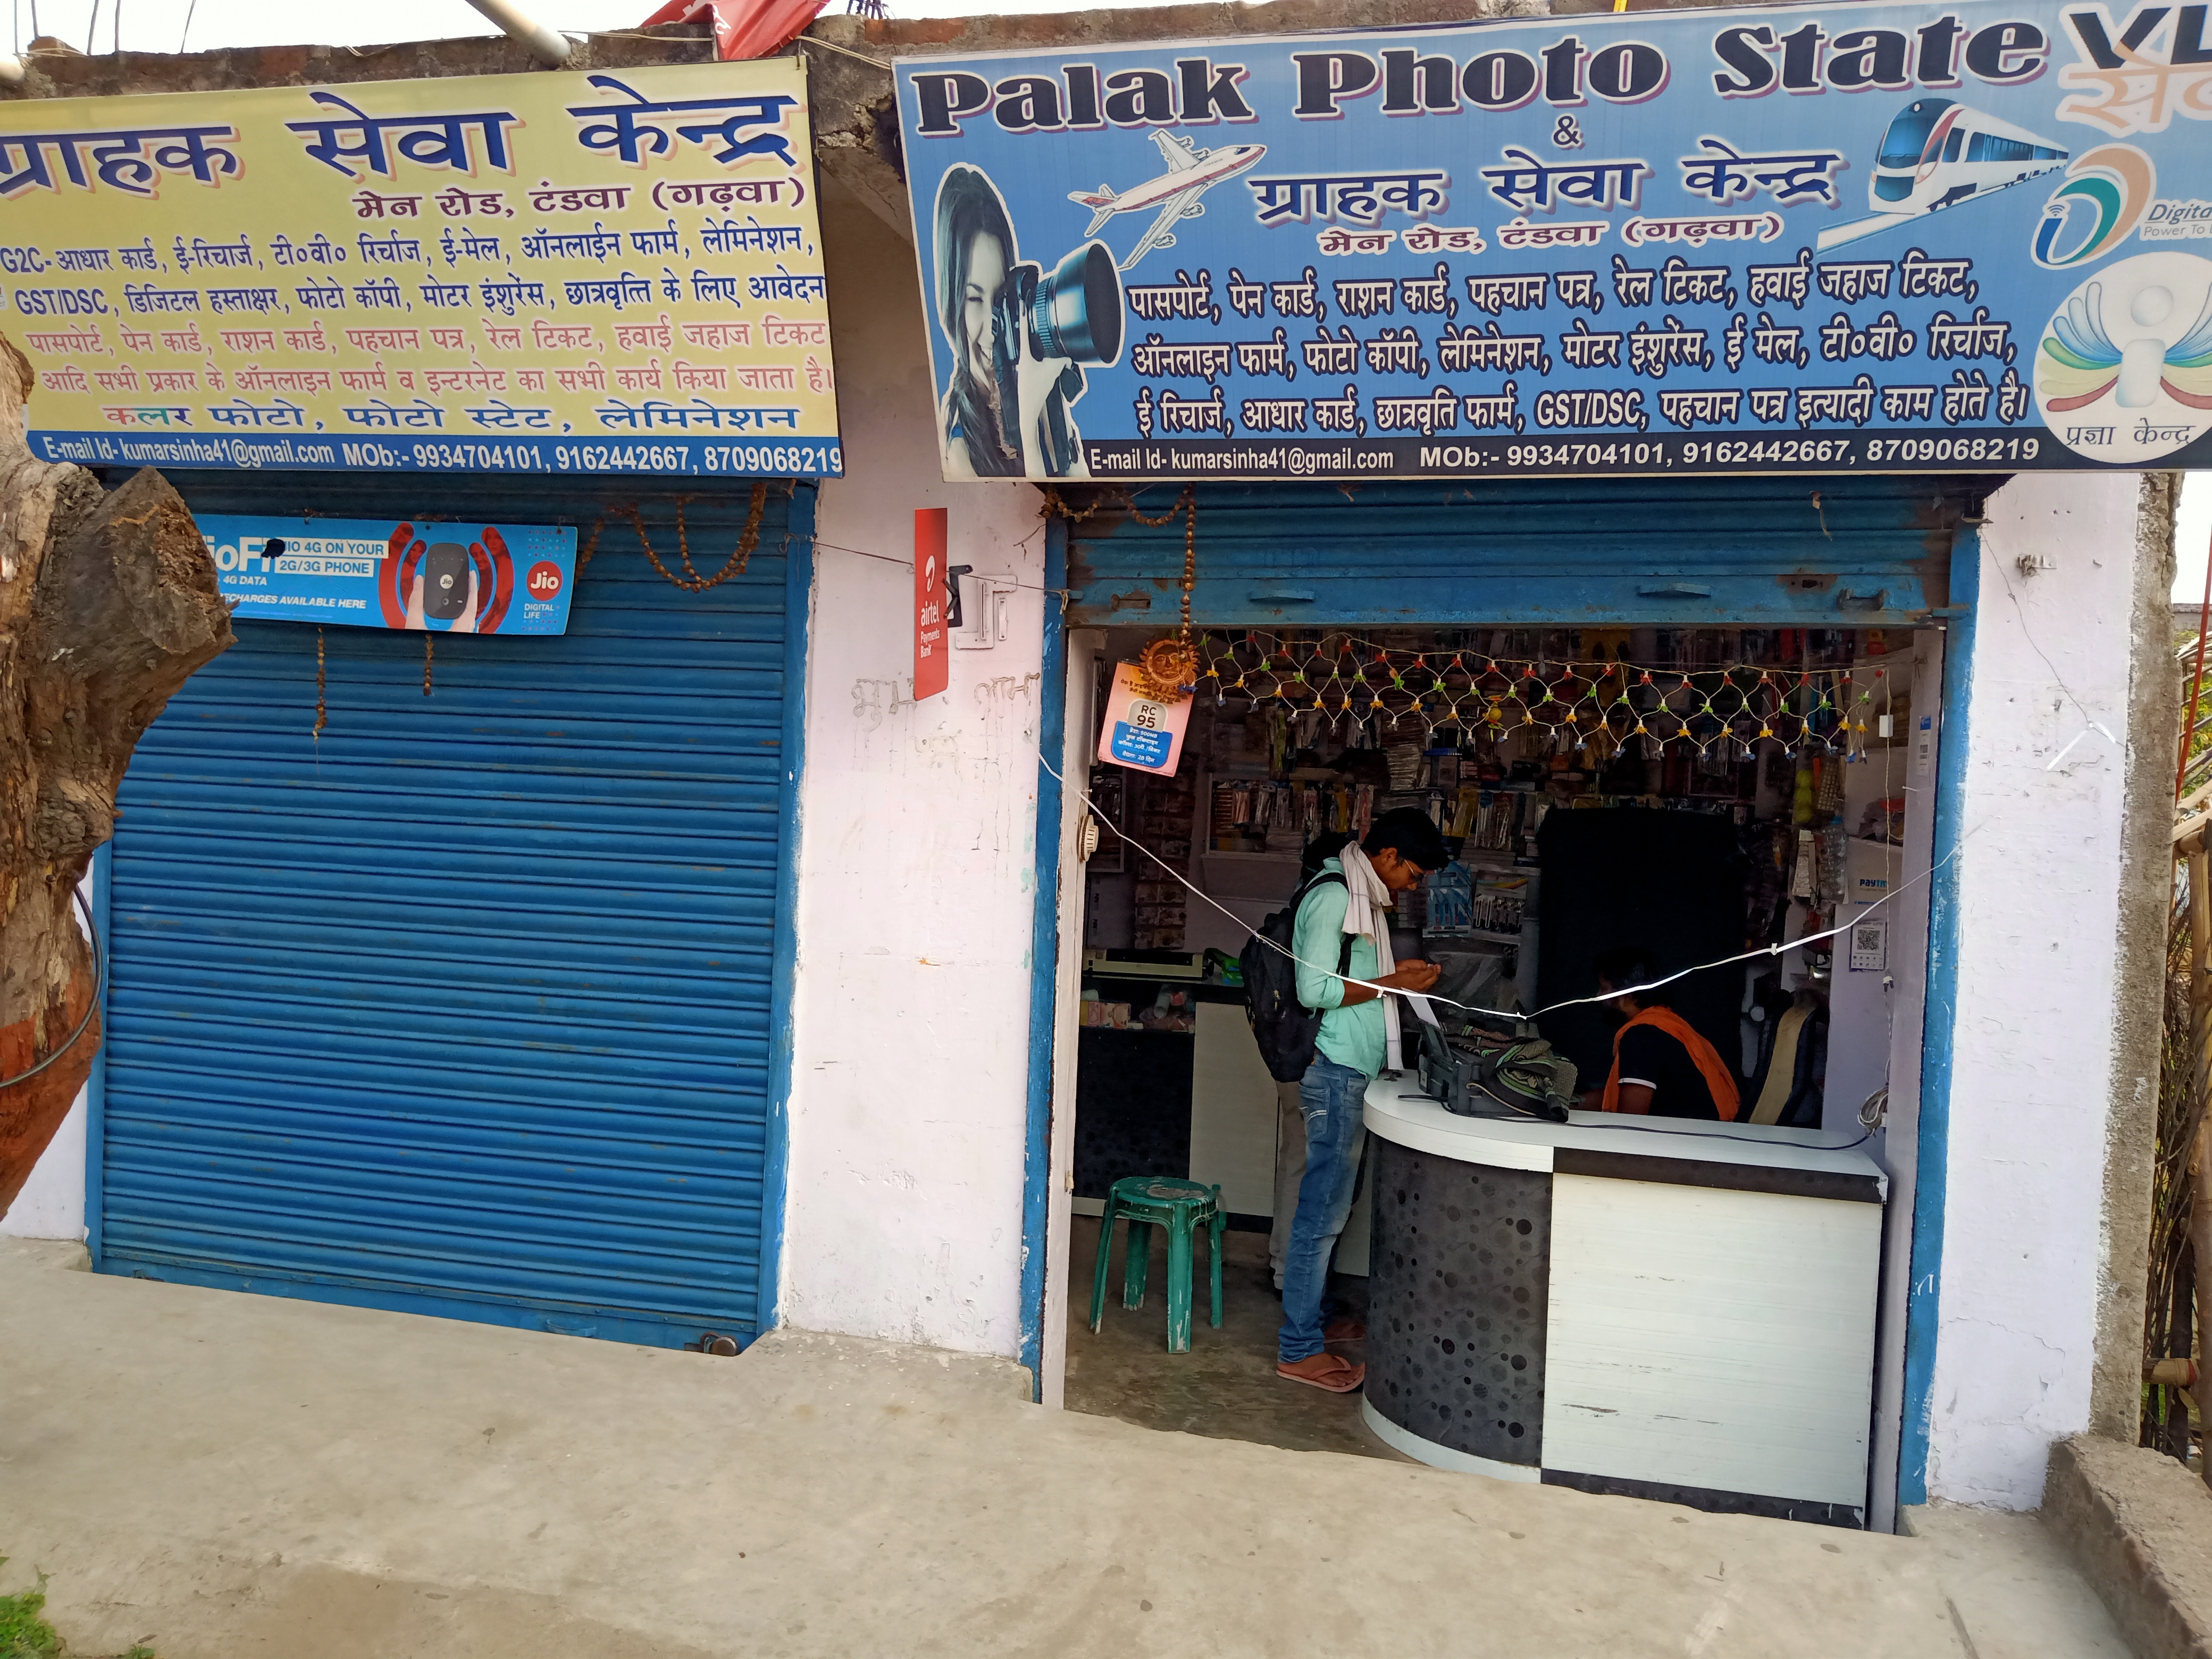 Palak photo state & Book santre garhwa - Profile Image